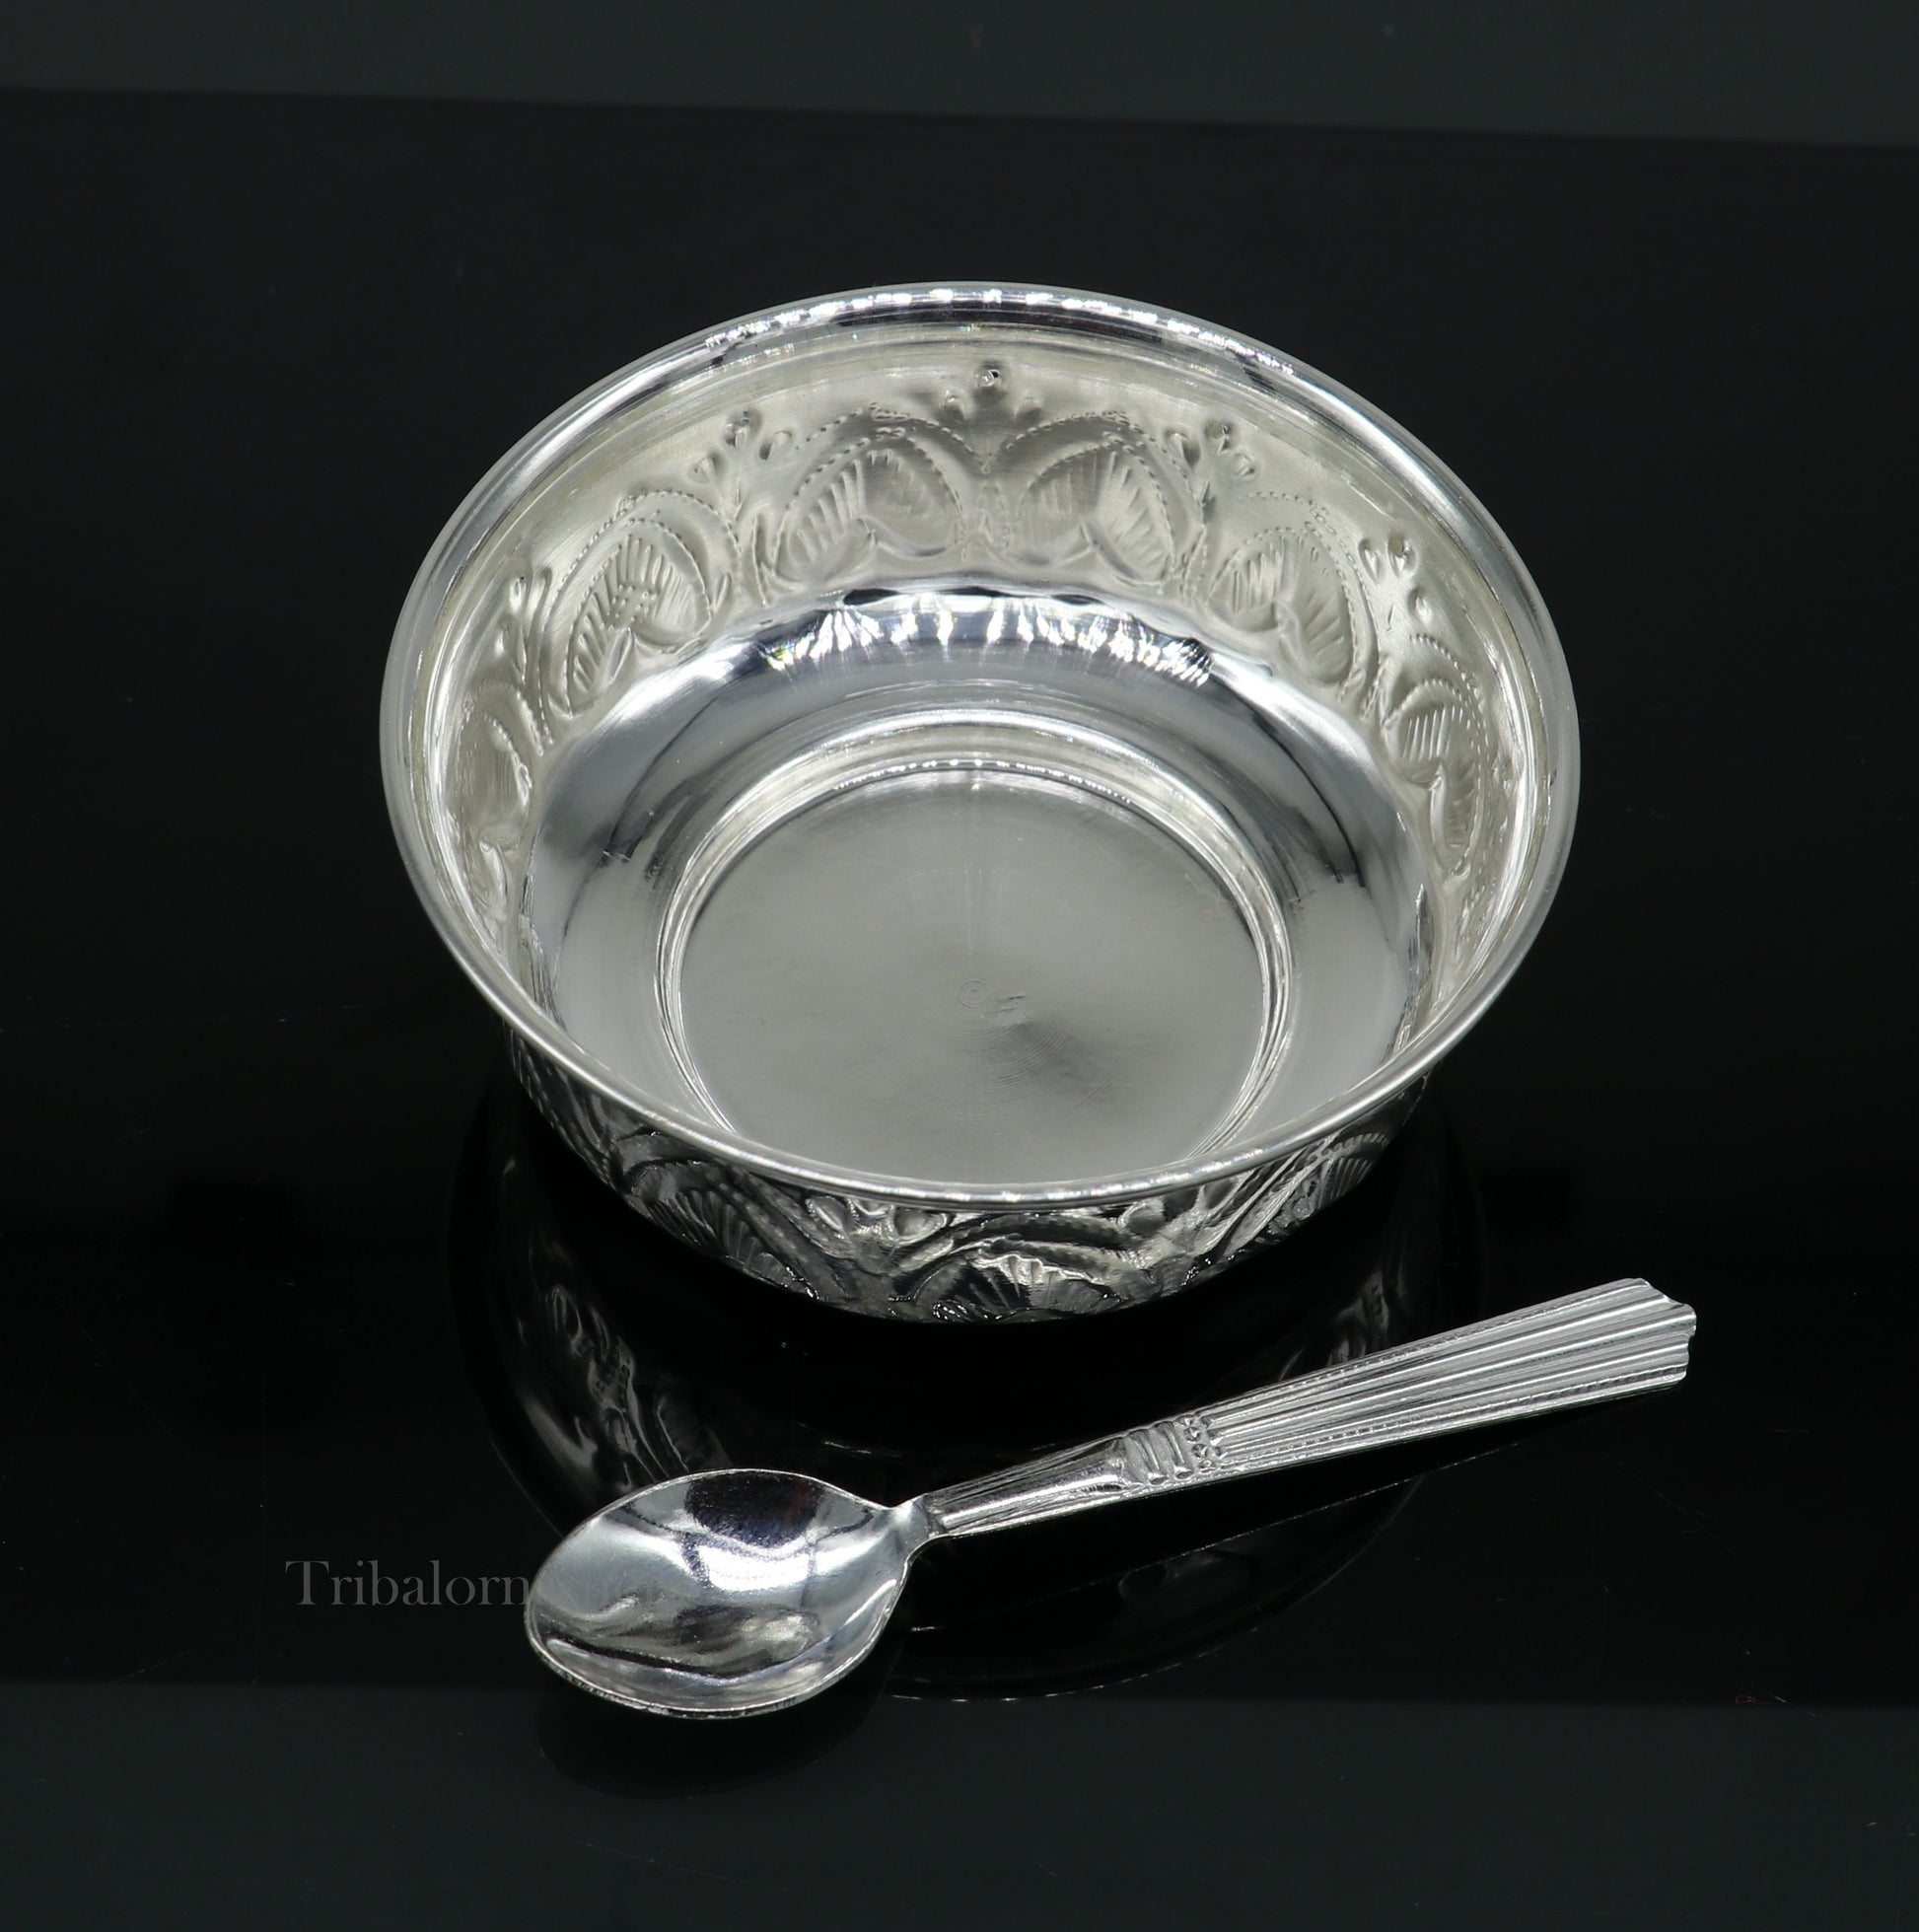 999 fine silver handmade kandrai nakshi work bowl, silver puja vessel, silver worshipping/puja utensils prasad bowl baby bowl sv245 - TRIBAL ORNAMENTS